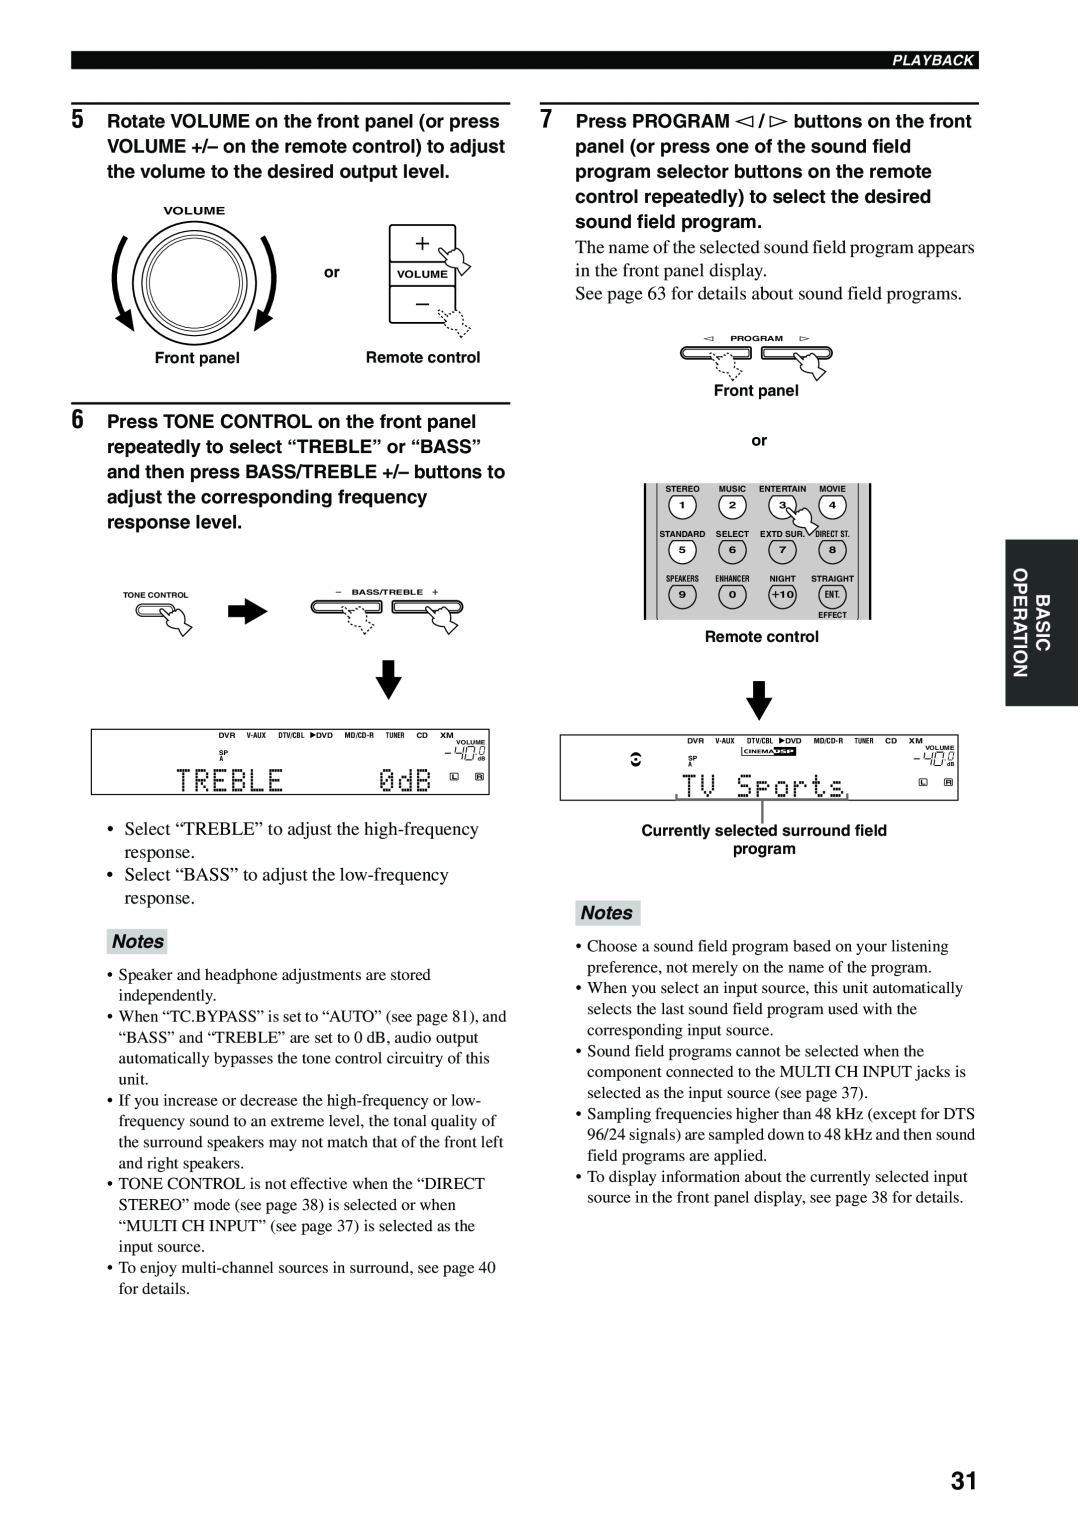 Yamaha HTR-5940 AV owner manual Treble, 0dB L R, TV Sports, Notes 